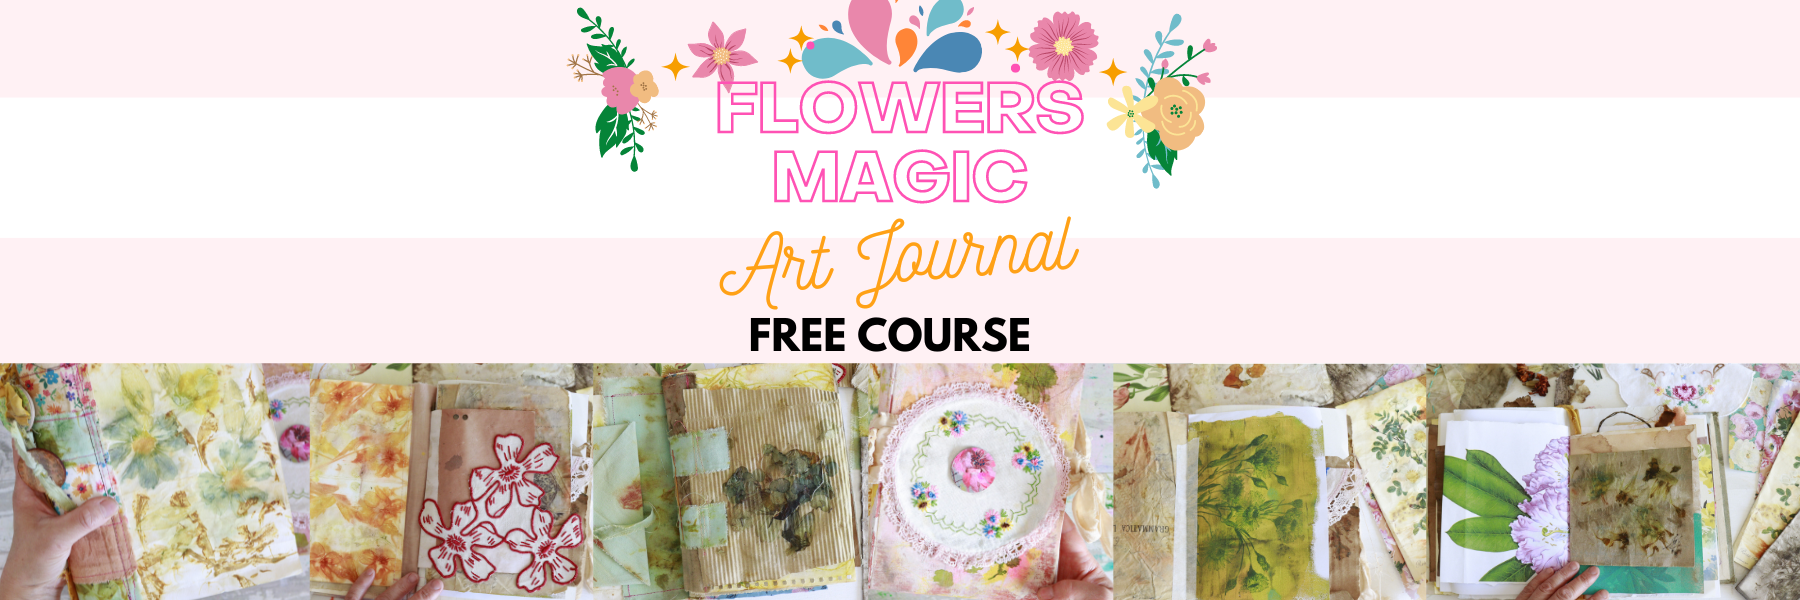 Flowers Magic art journal free course